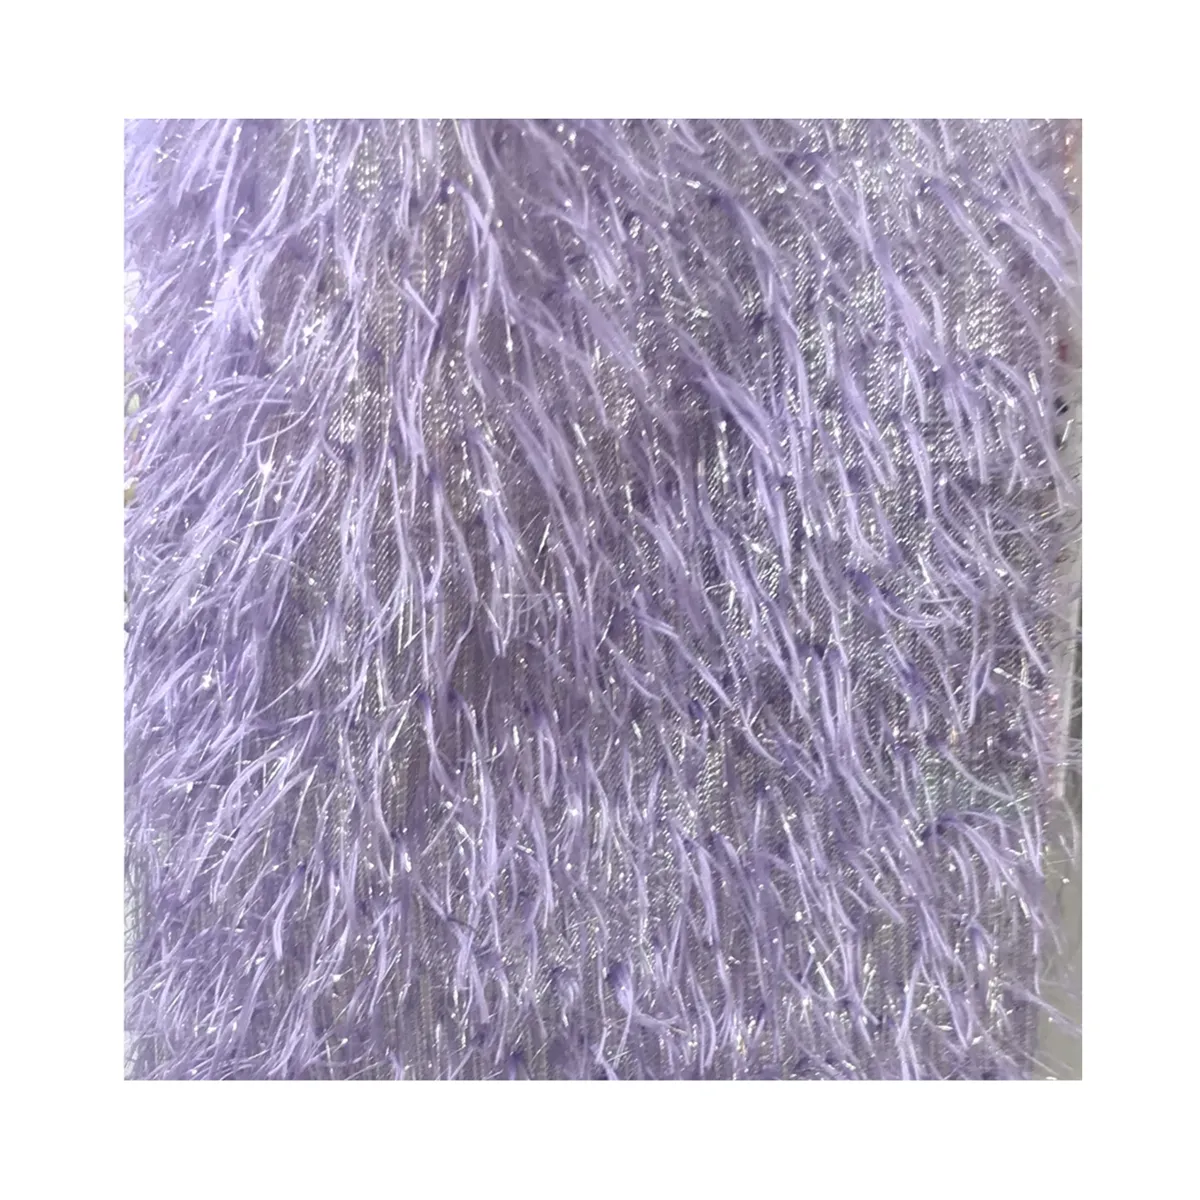 Bespoken Fur fabric with silver metallic yarn sequins